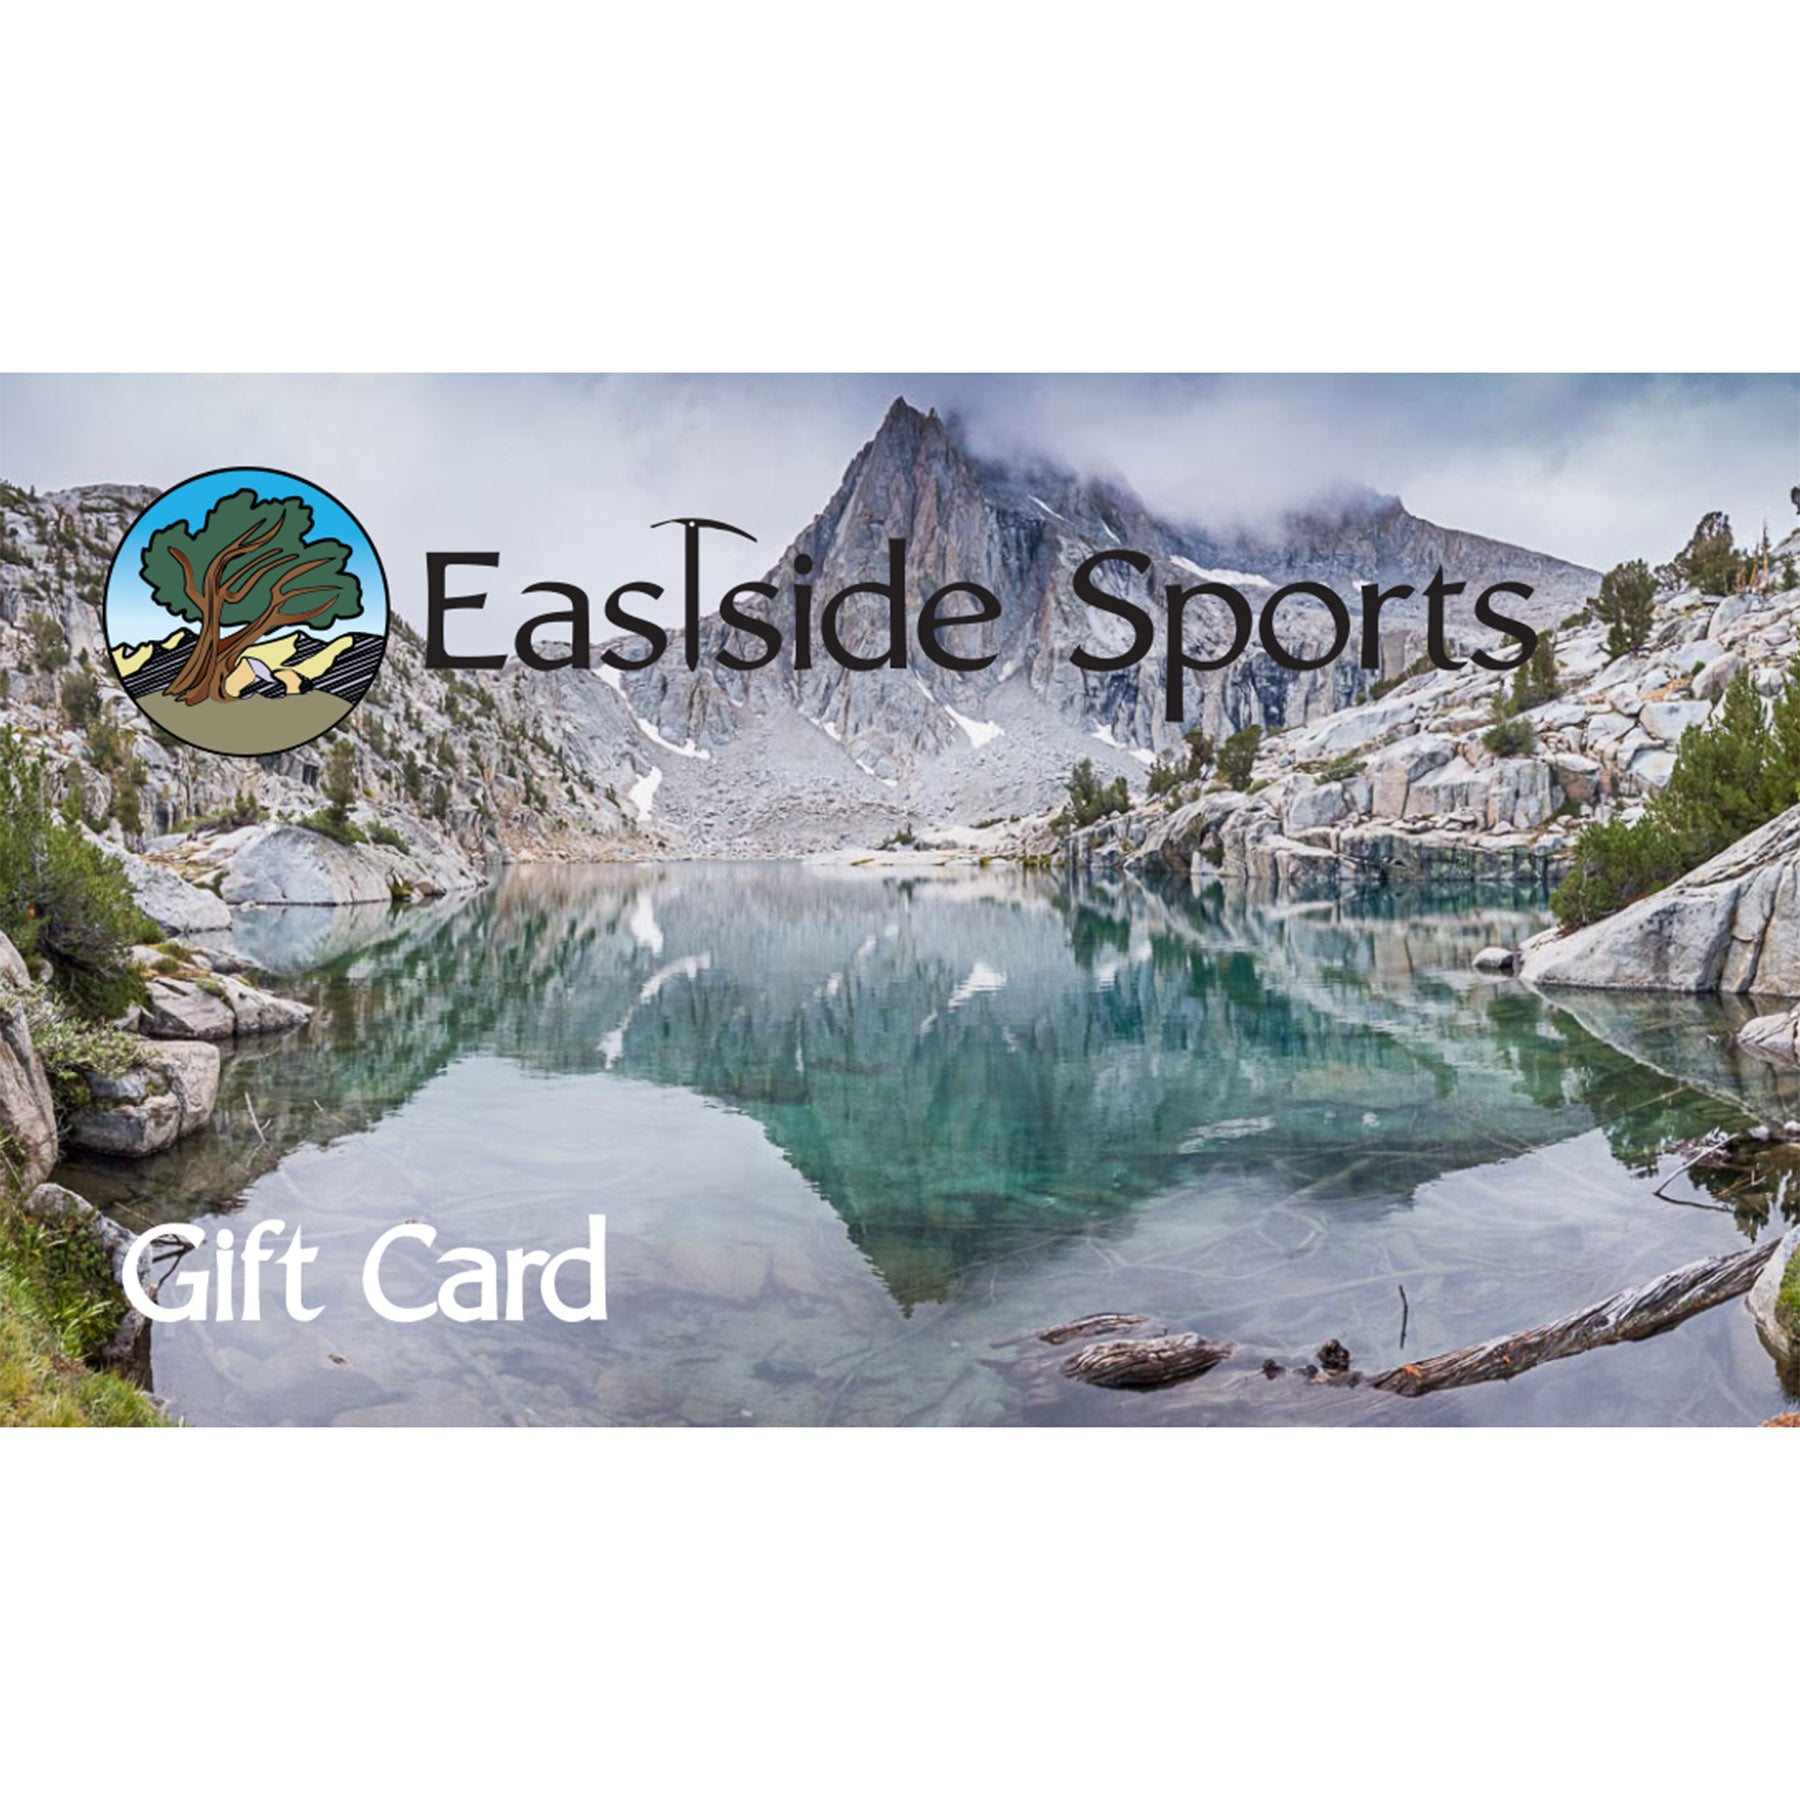 Gift Cards - Eastside Sports